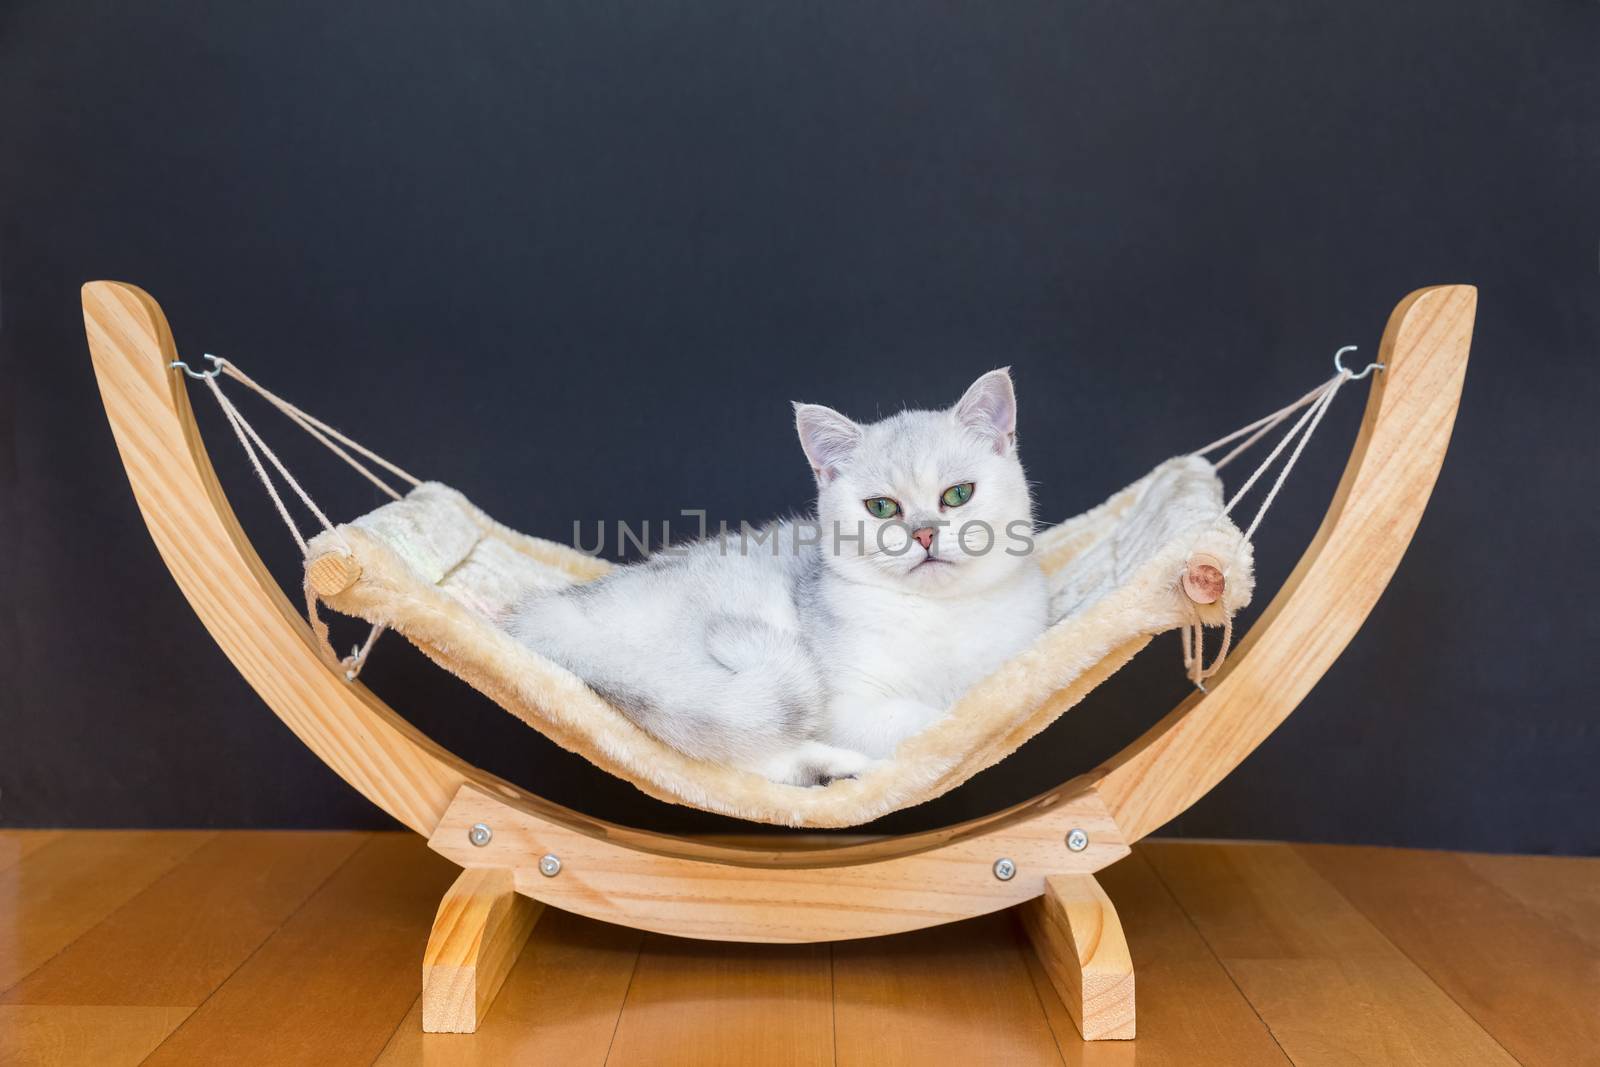 British short hair Silver shaded cat lying lazy in hammock